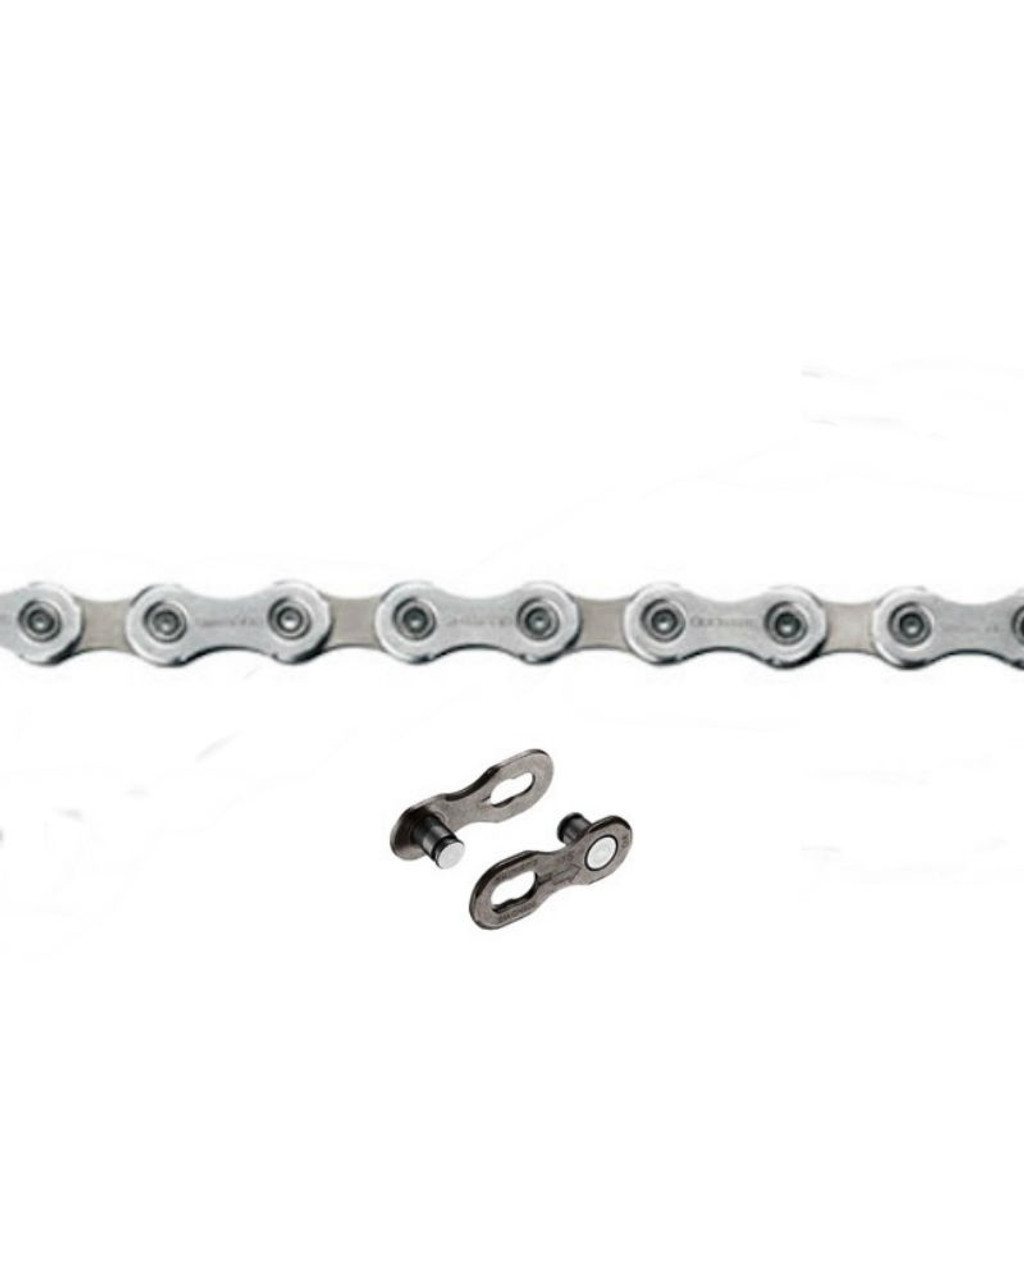 hg601 chain